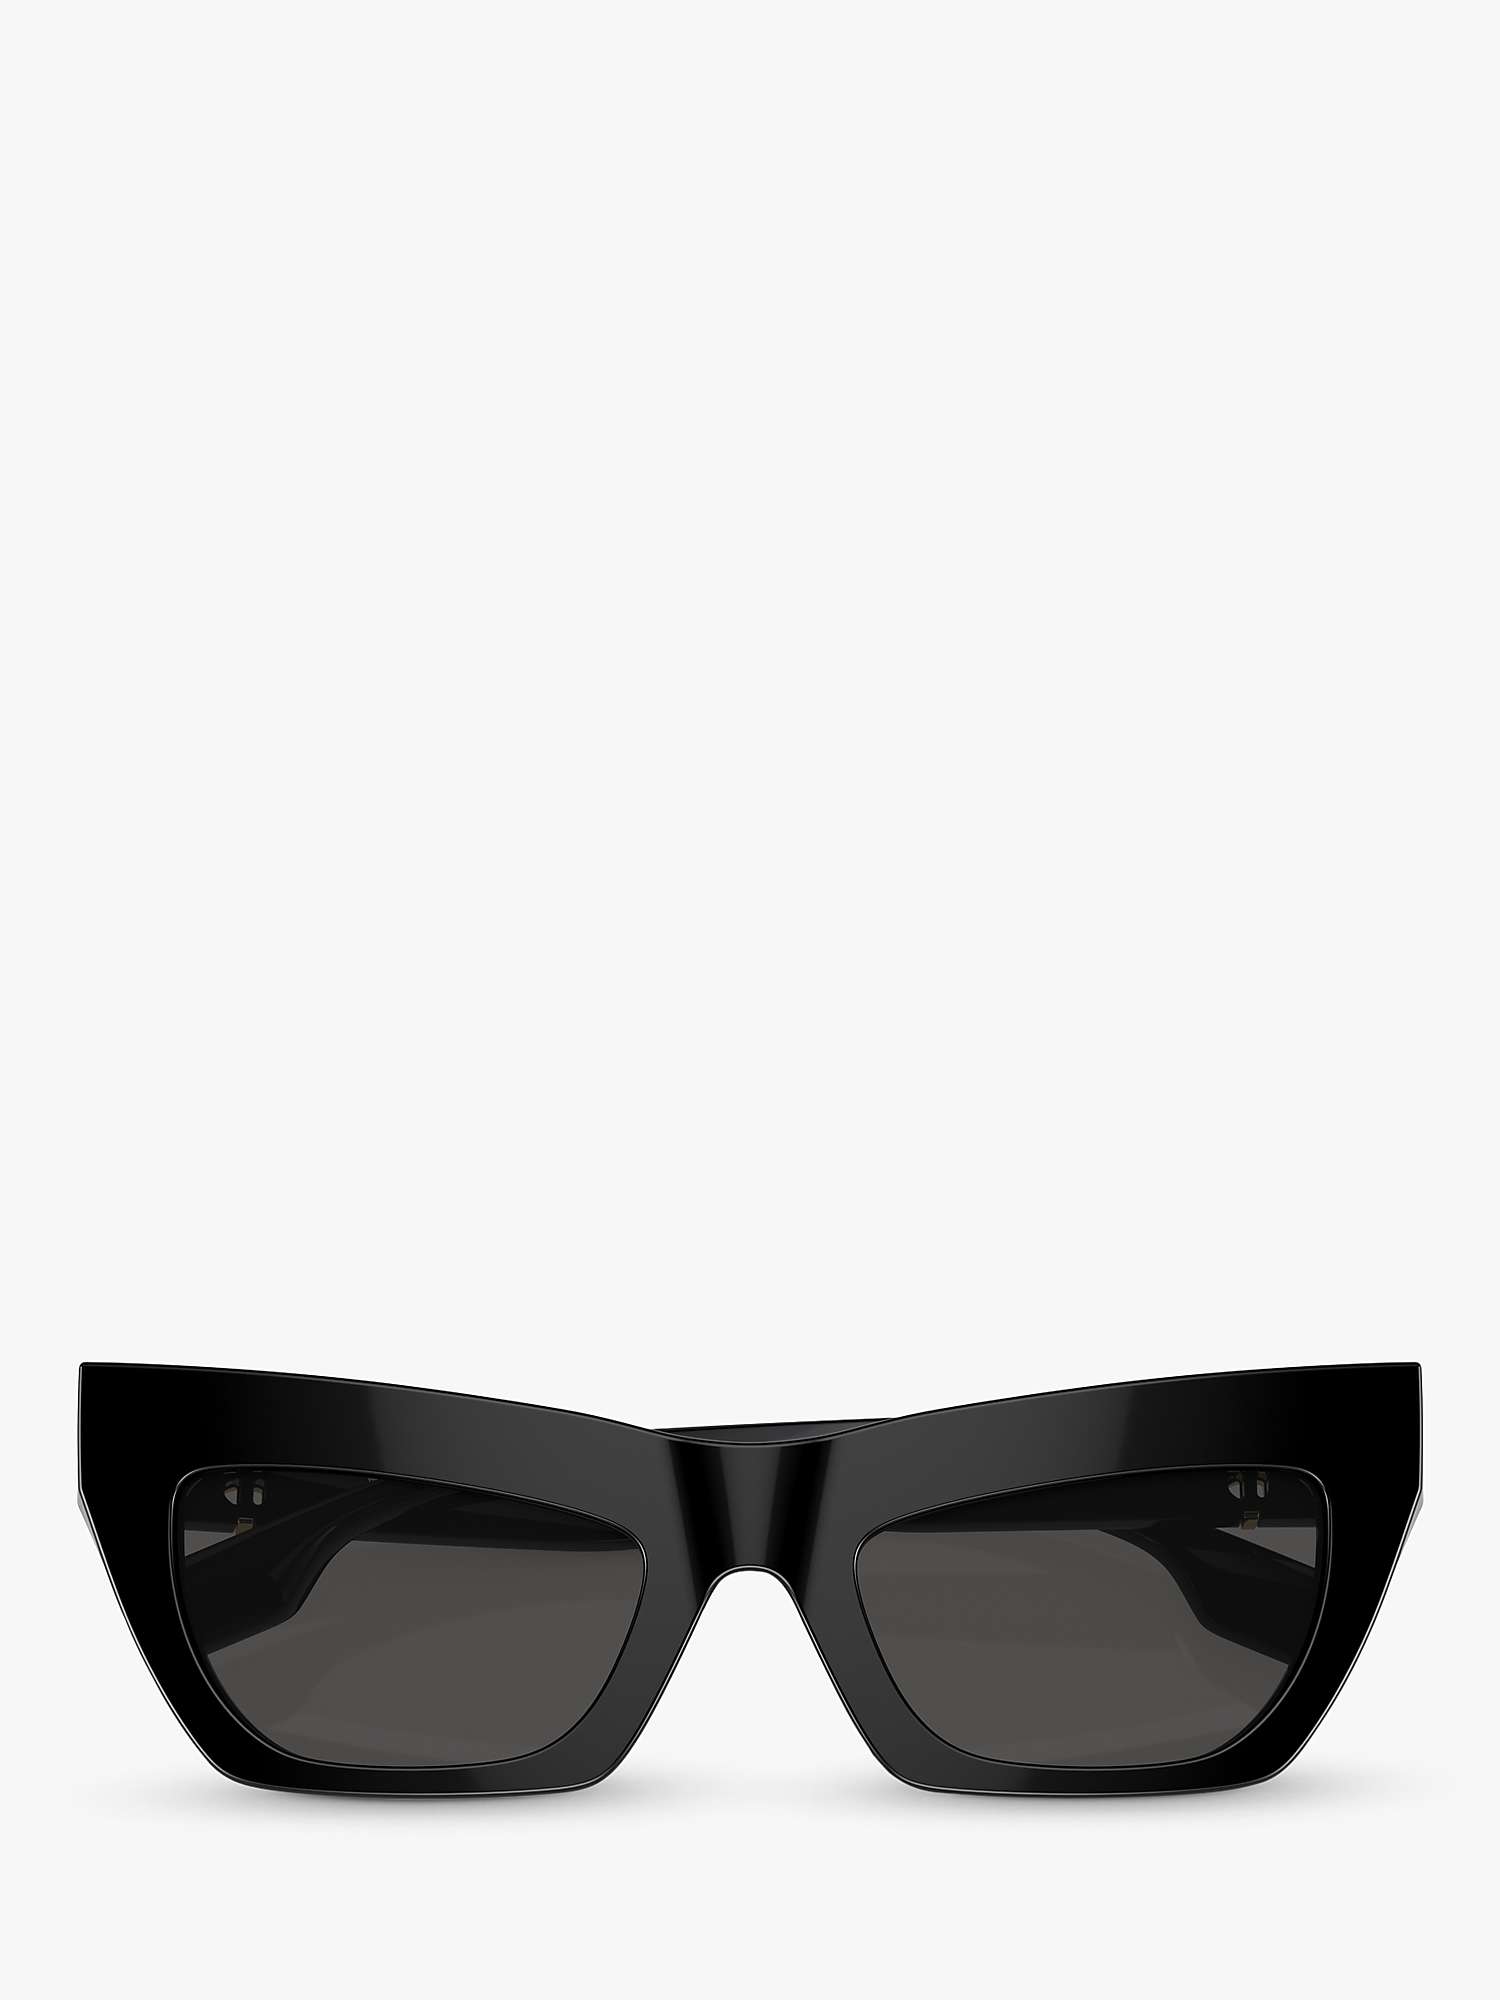 Buy Burberry BE4405 Women's Cat's Eye Sunglasses, Black/Black Online at johnlewis.com